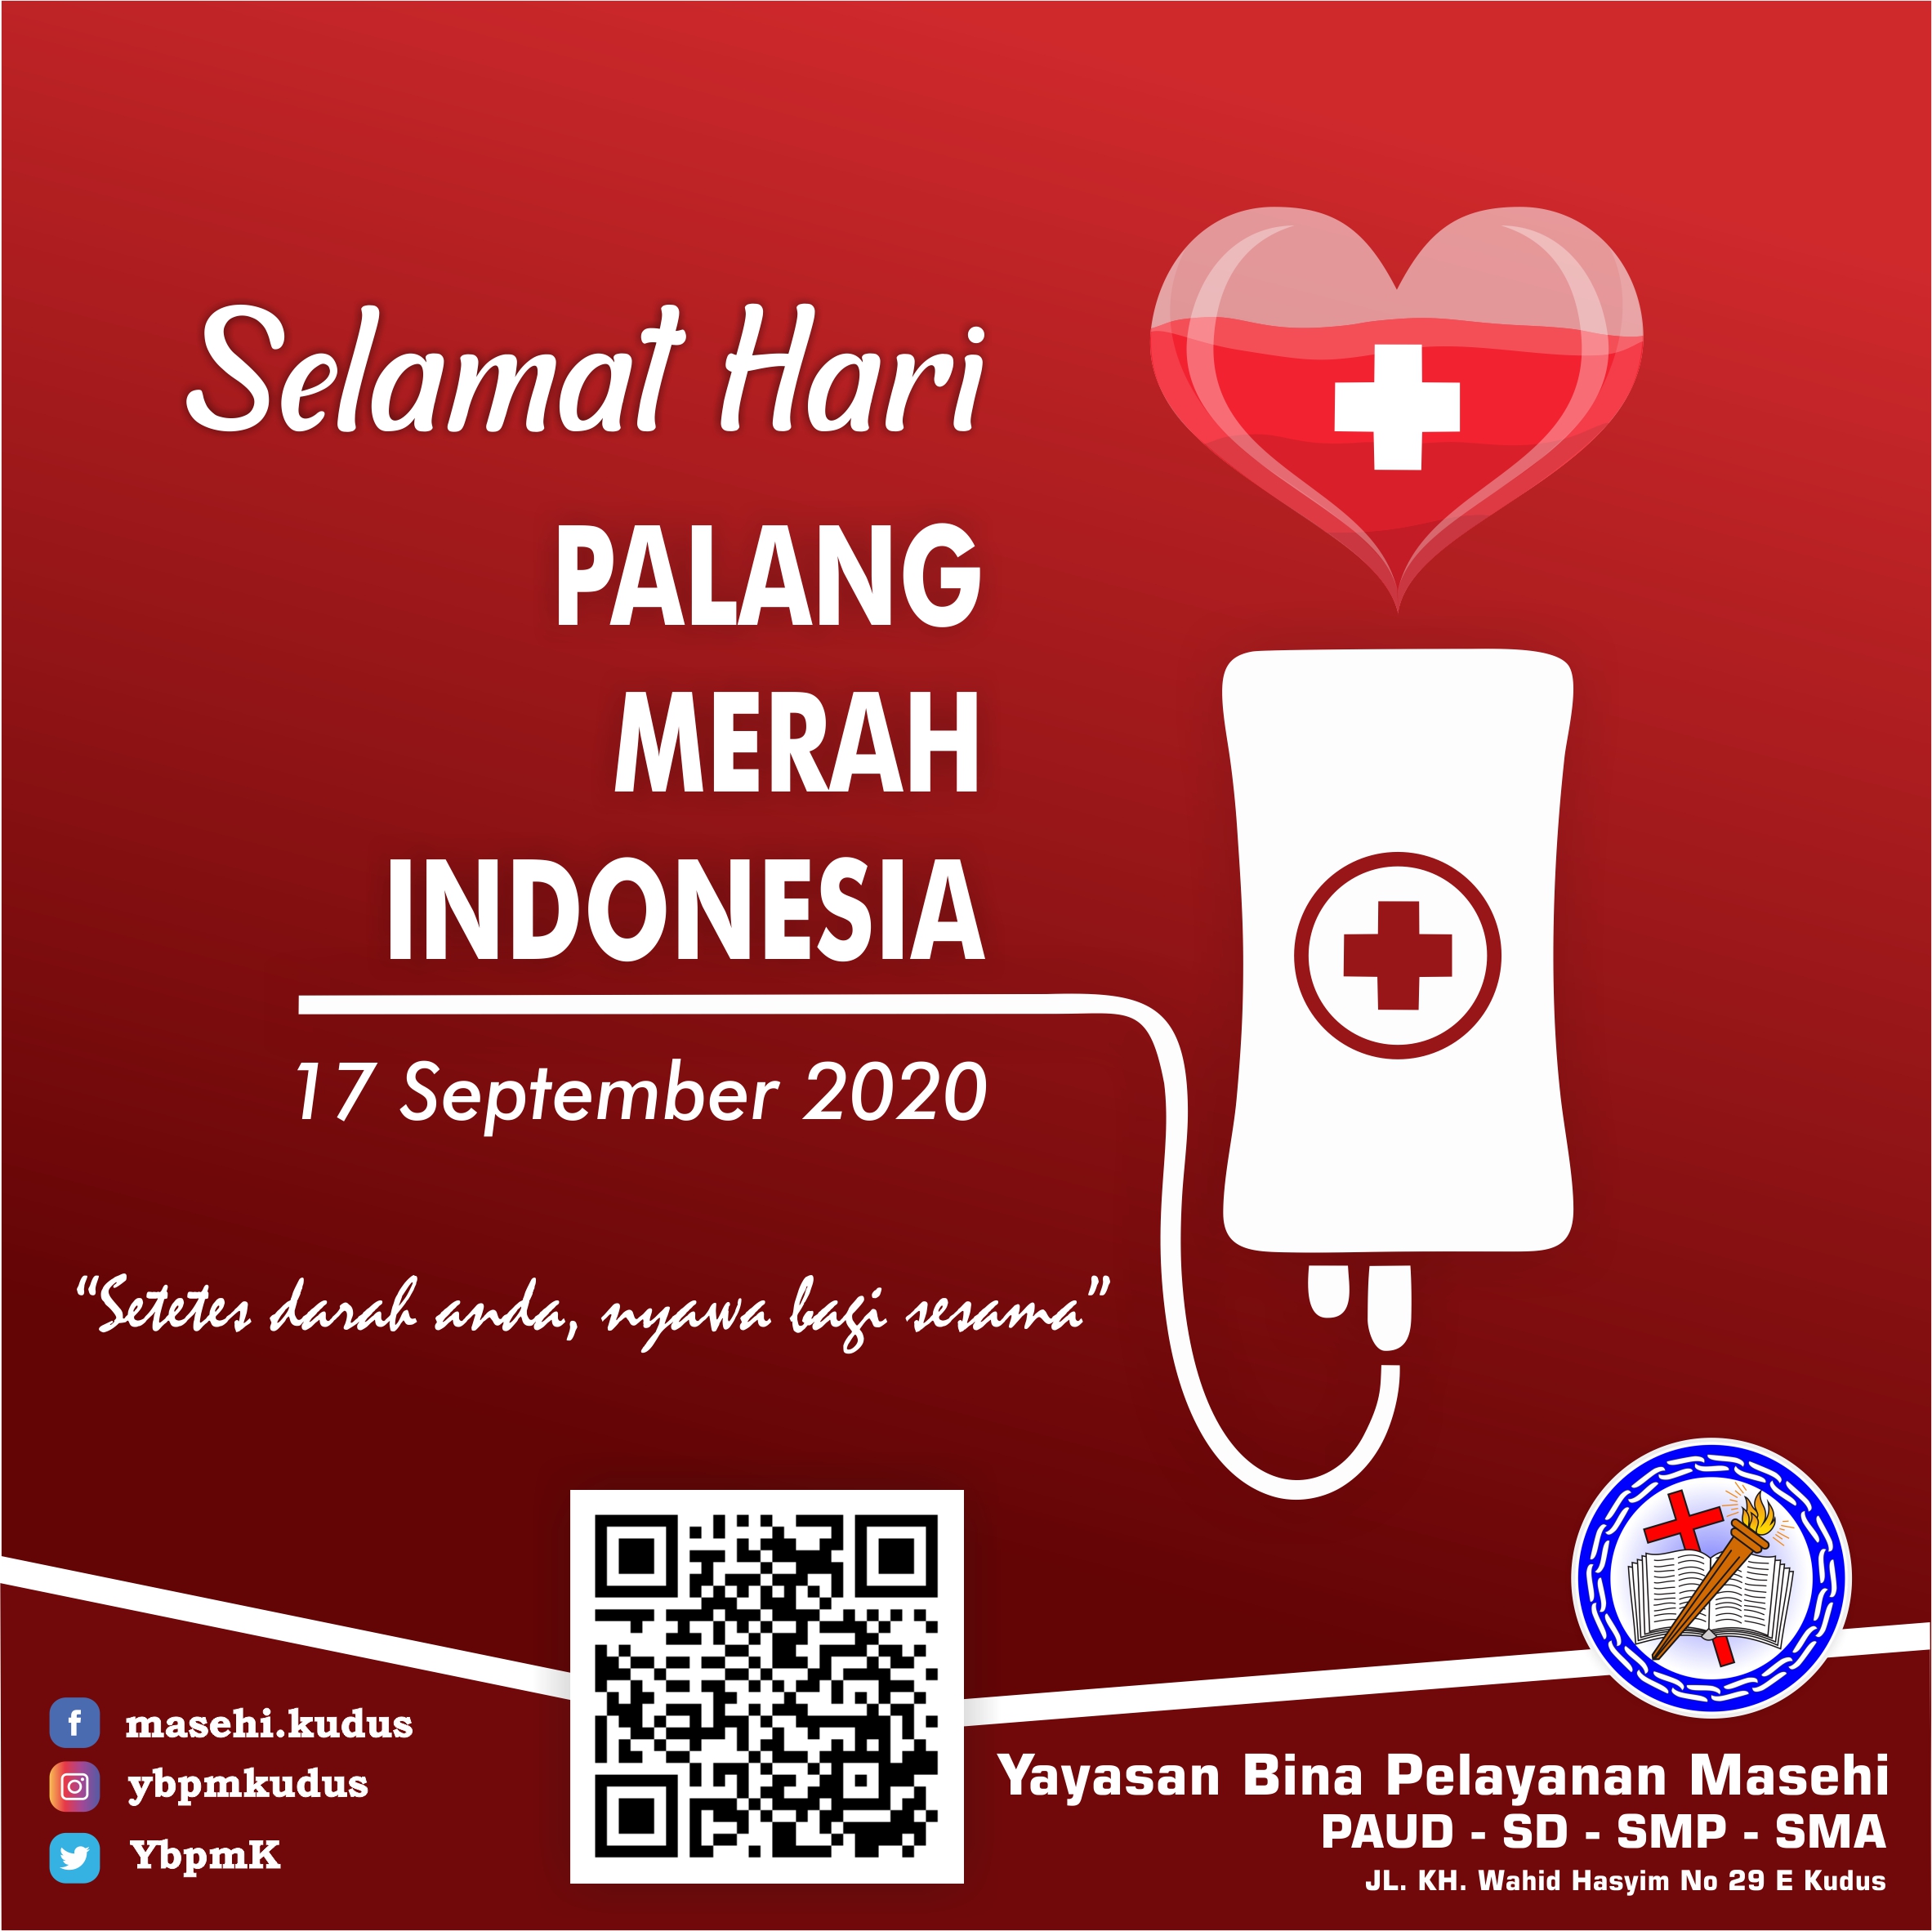 Selamat Hari Palang Merah Indonesia